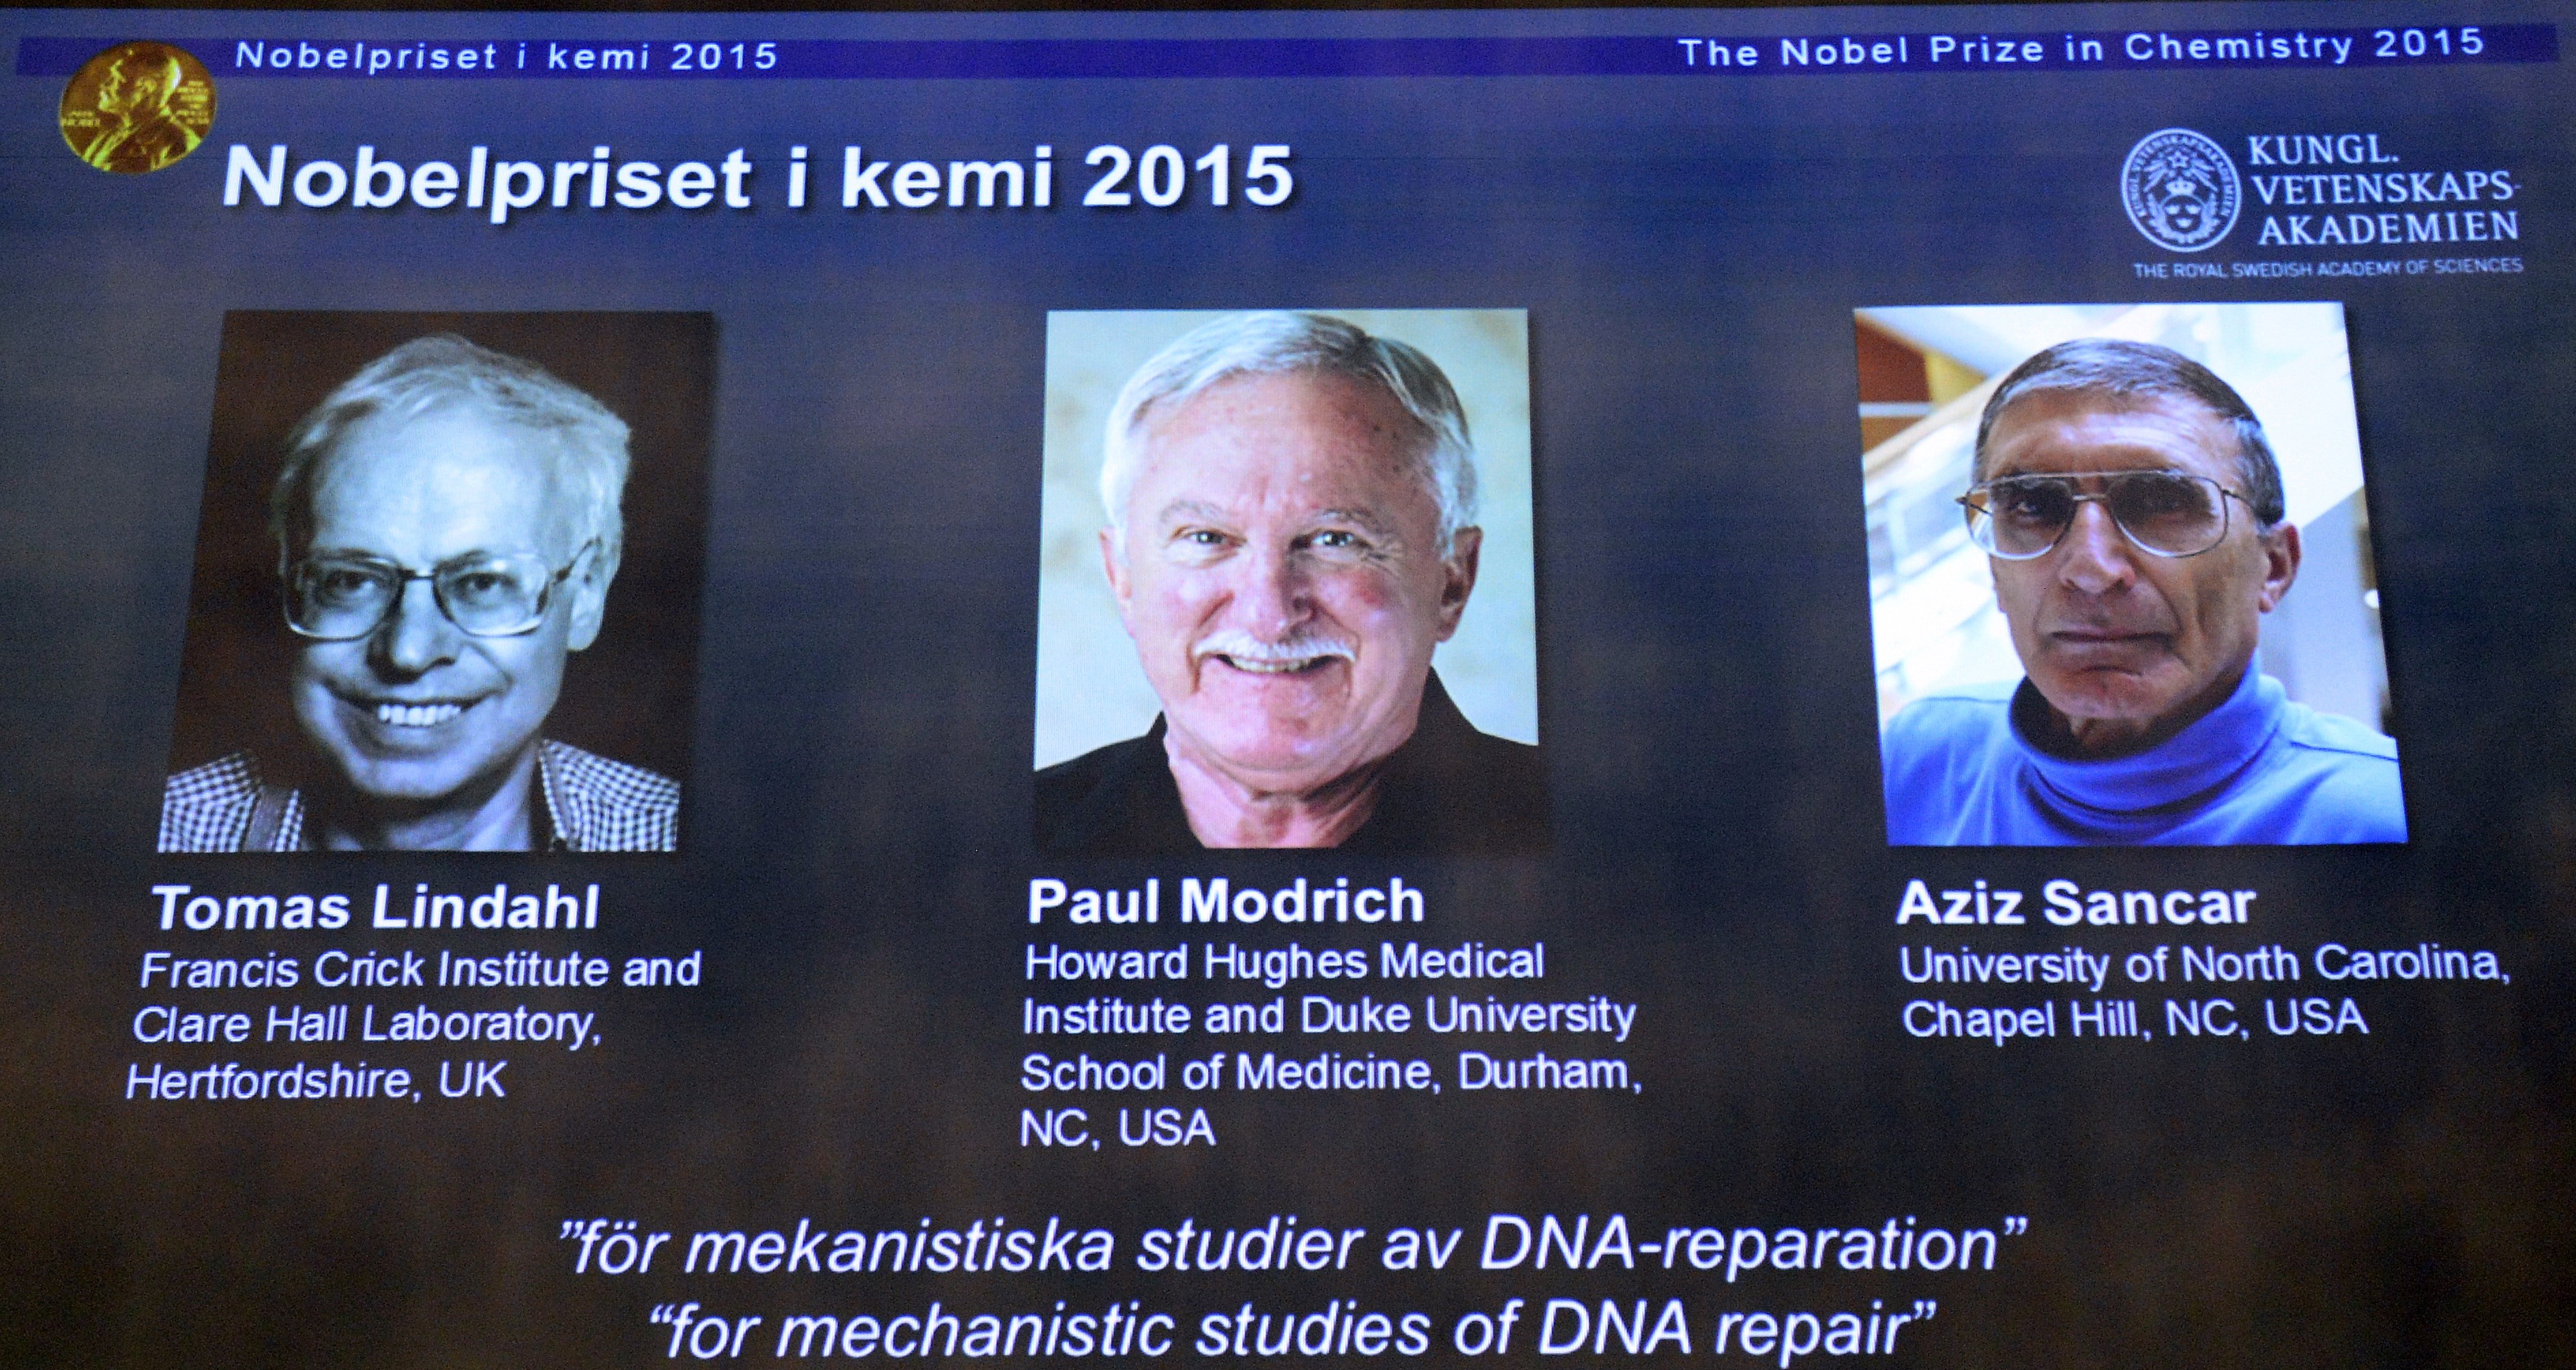 Tomas Lindahl, Paul Modrich, and Aziz Sancar won the 2015 Nobel Prize in Chemistry